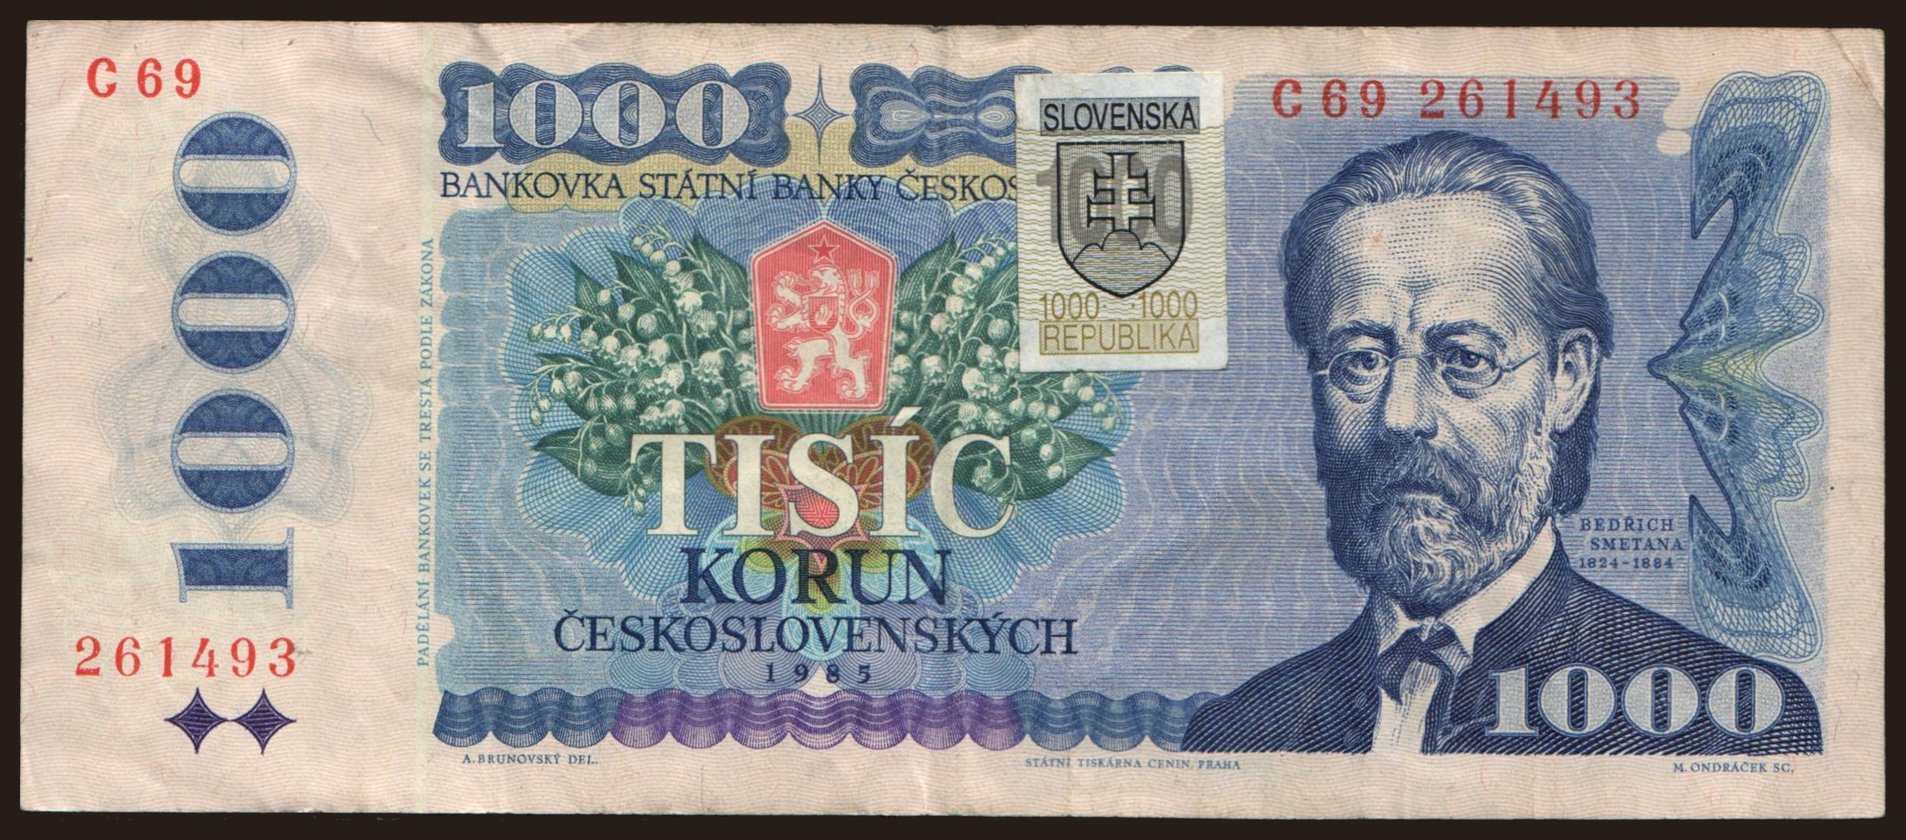 1000 Sk, 1985(93)